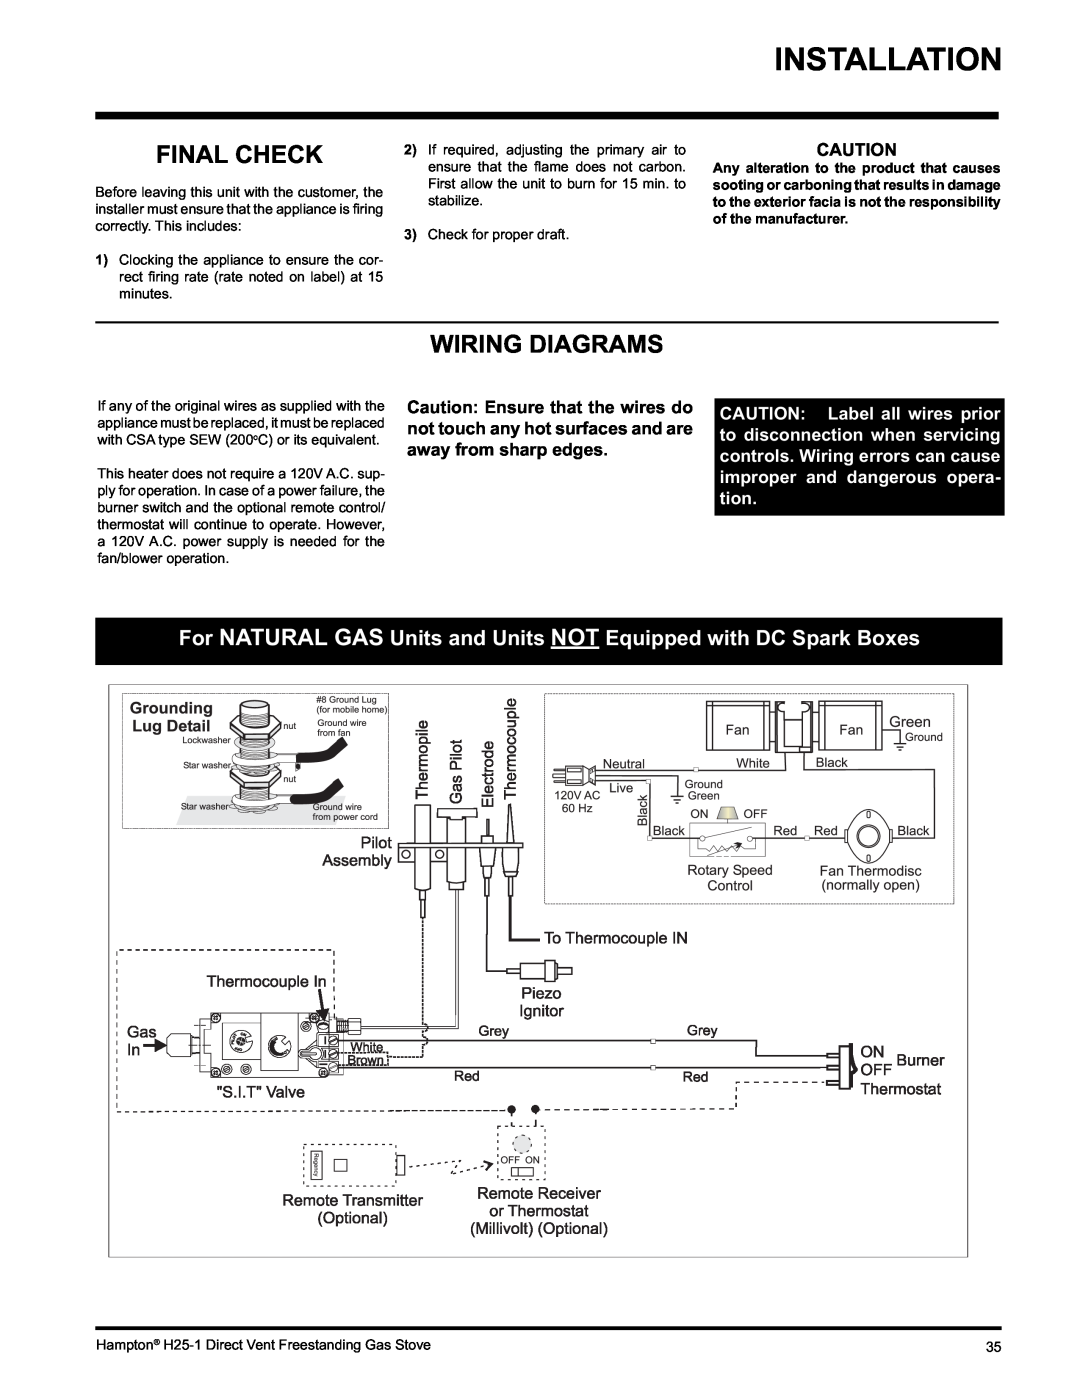 Hampton Direct H25-LP1 Propane, H25-NG1, H25-LP1 installation manual Final Check, Wiring Diagrams 